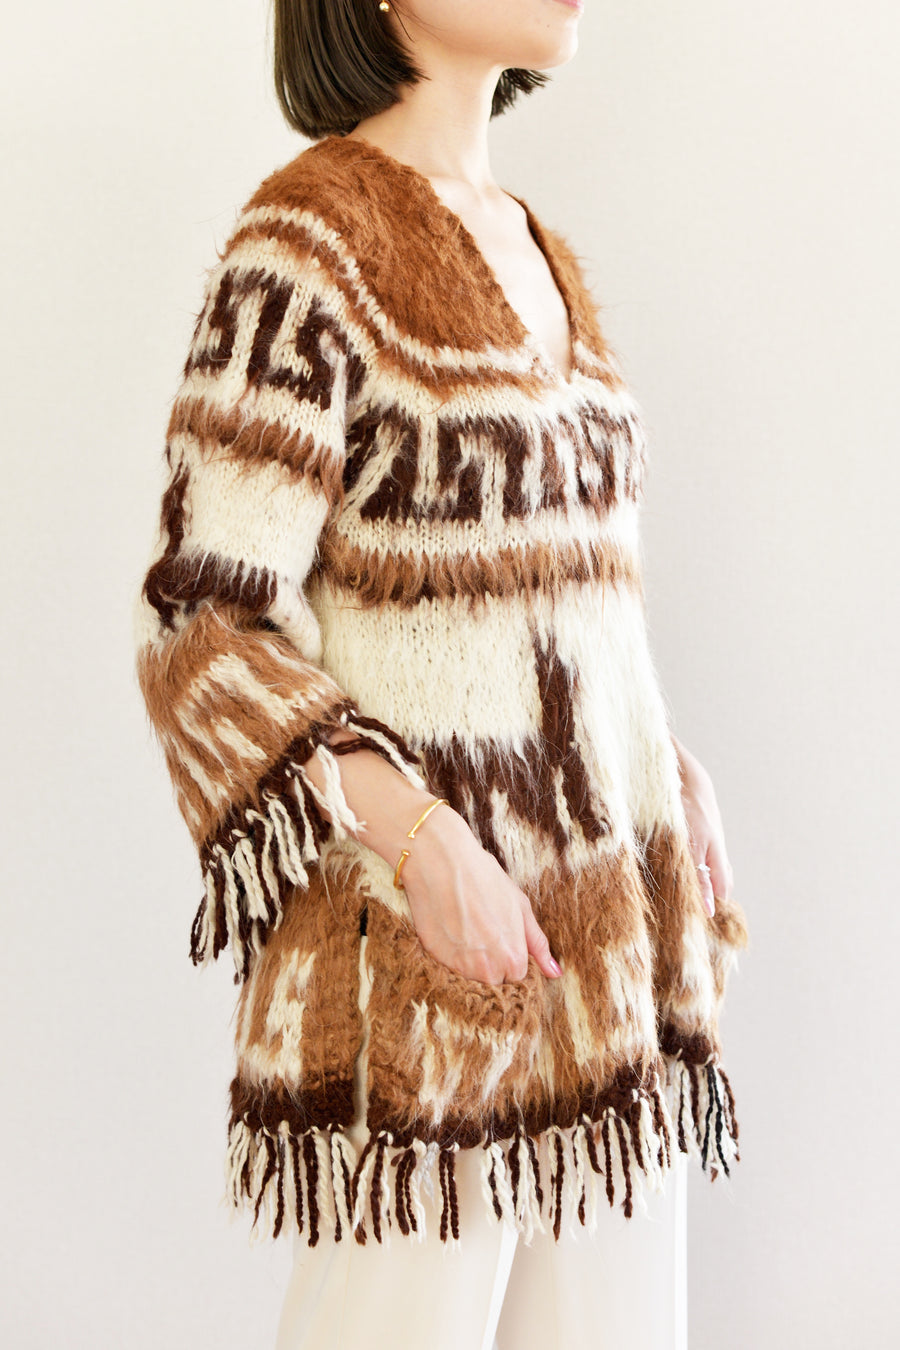 Vintage 1970's Alpaca Shaggy Fringes Sweater